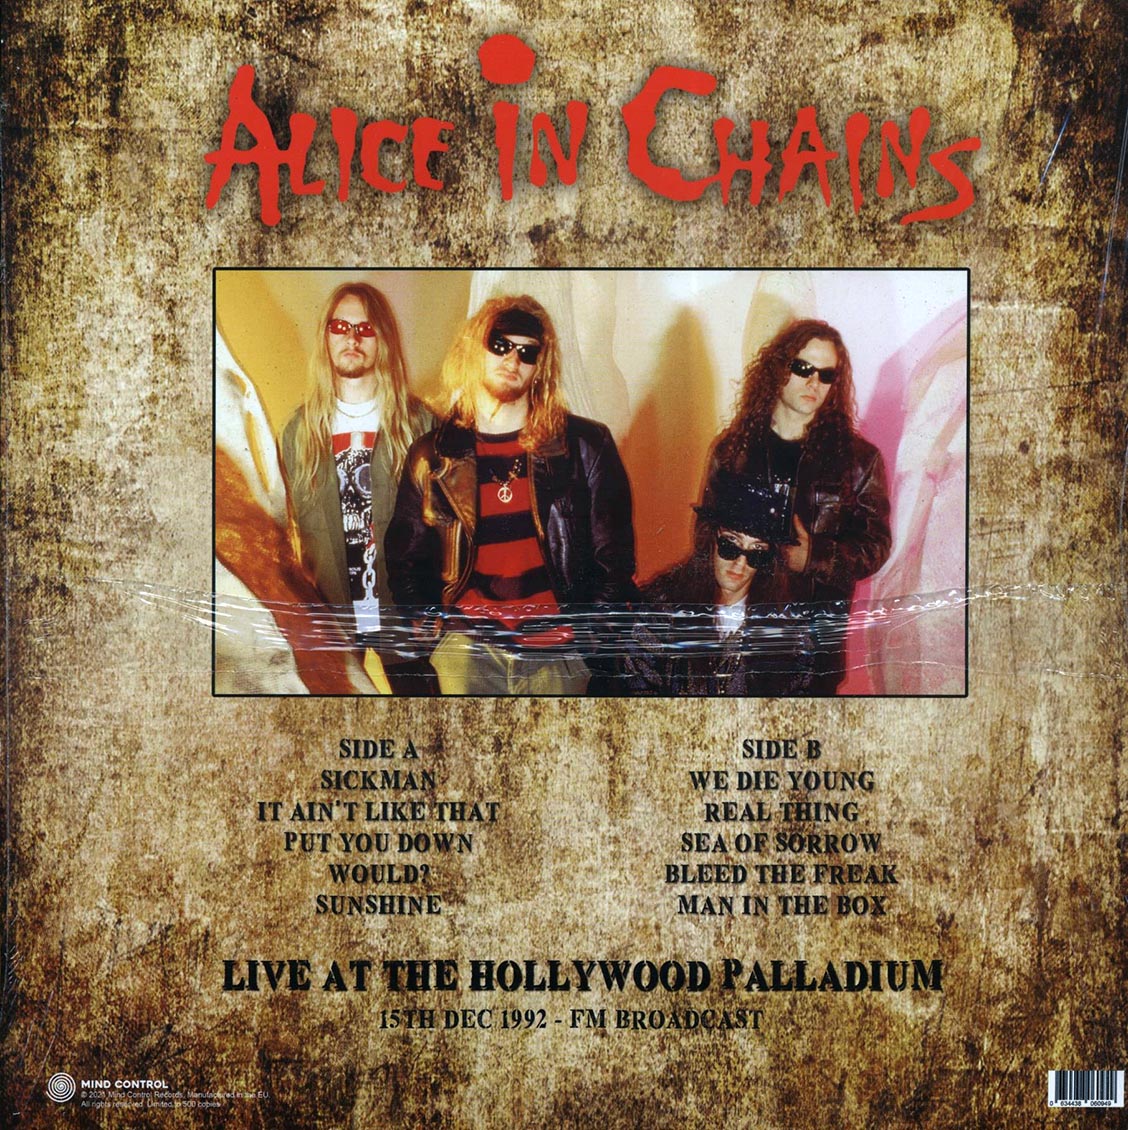 Alice In Chains - Live At The Hollywood Palladium: 15th Dec 1992 FM Broadcast (ltd. 500 copies made) - Vinyl LP, LP